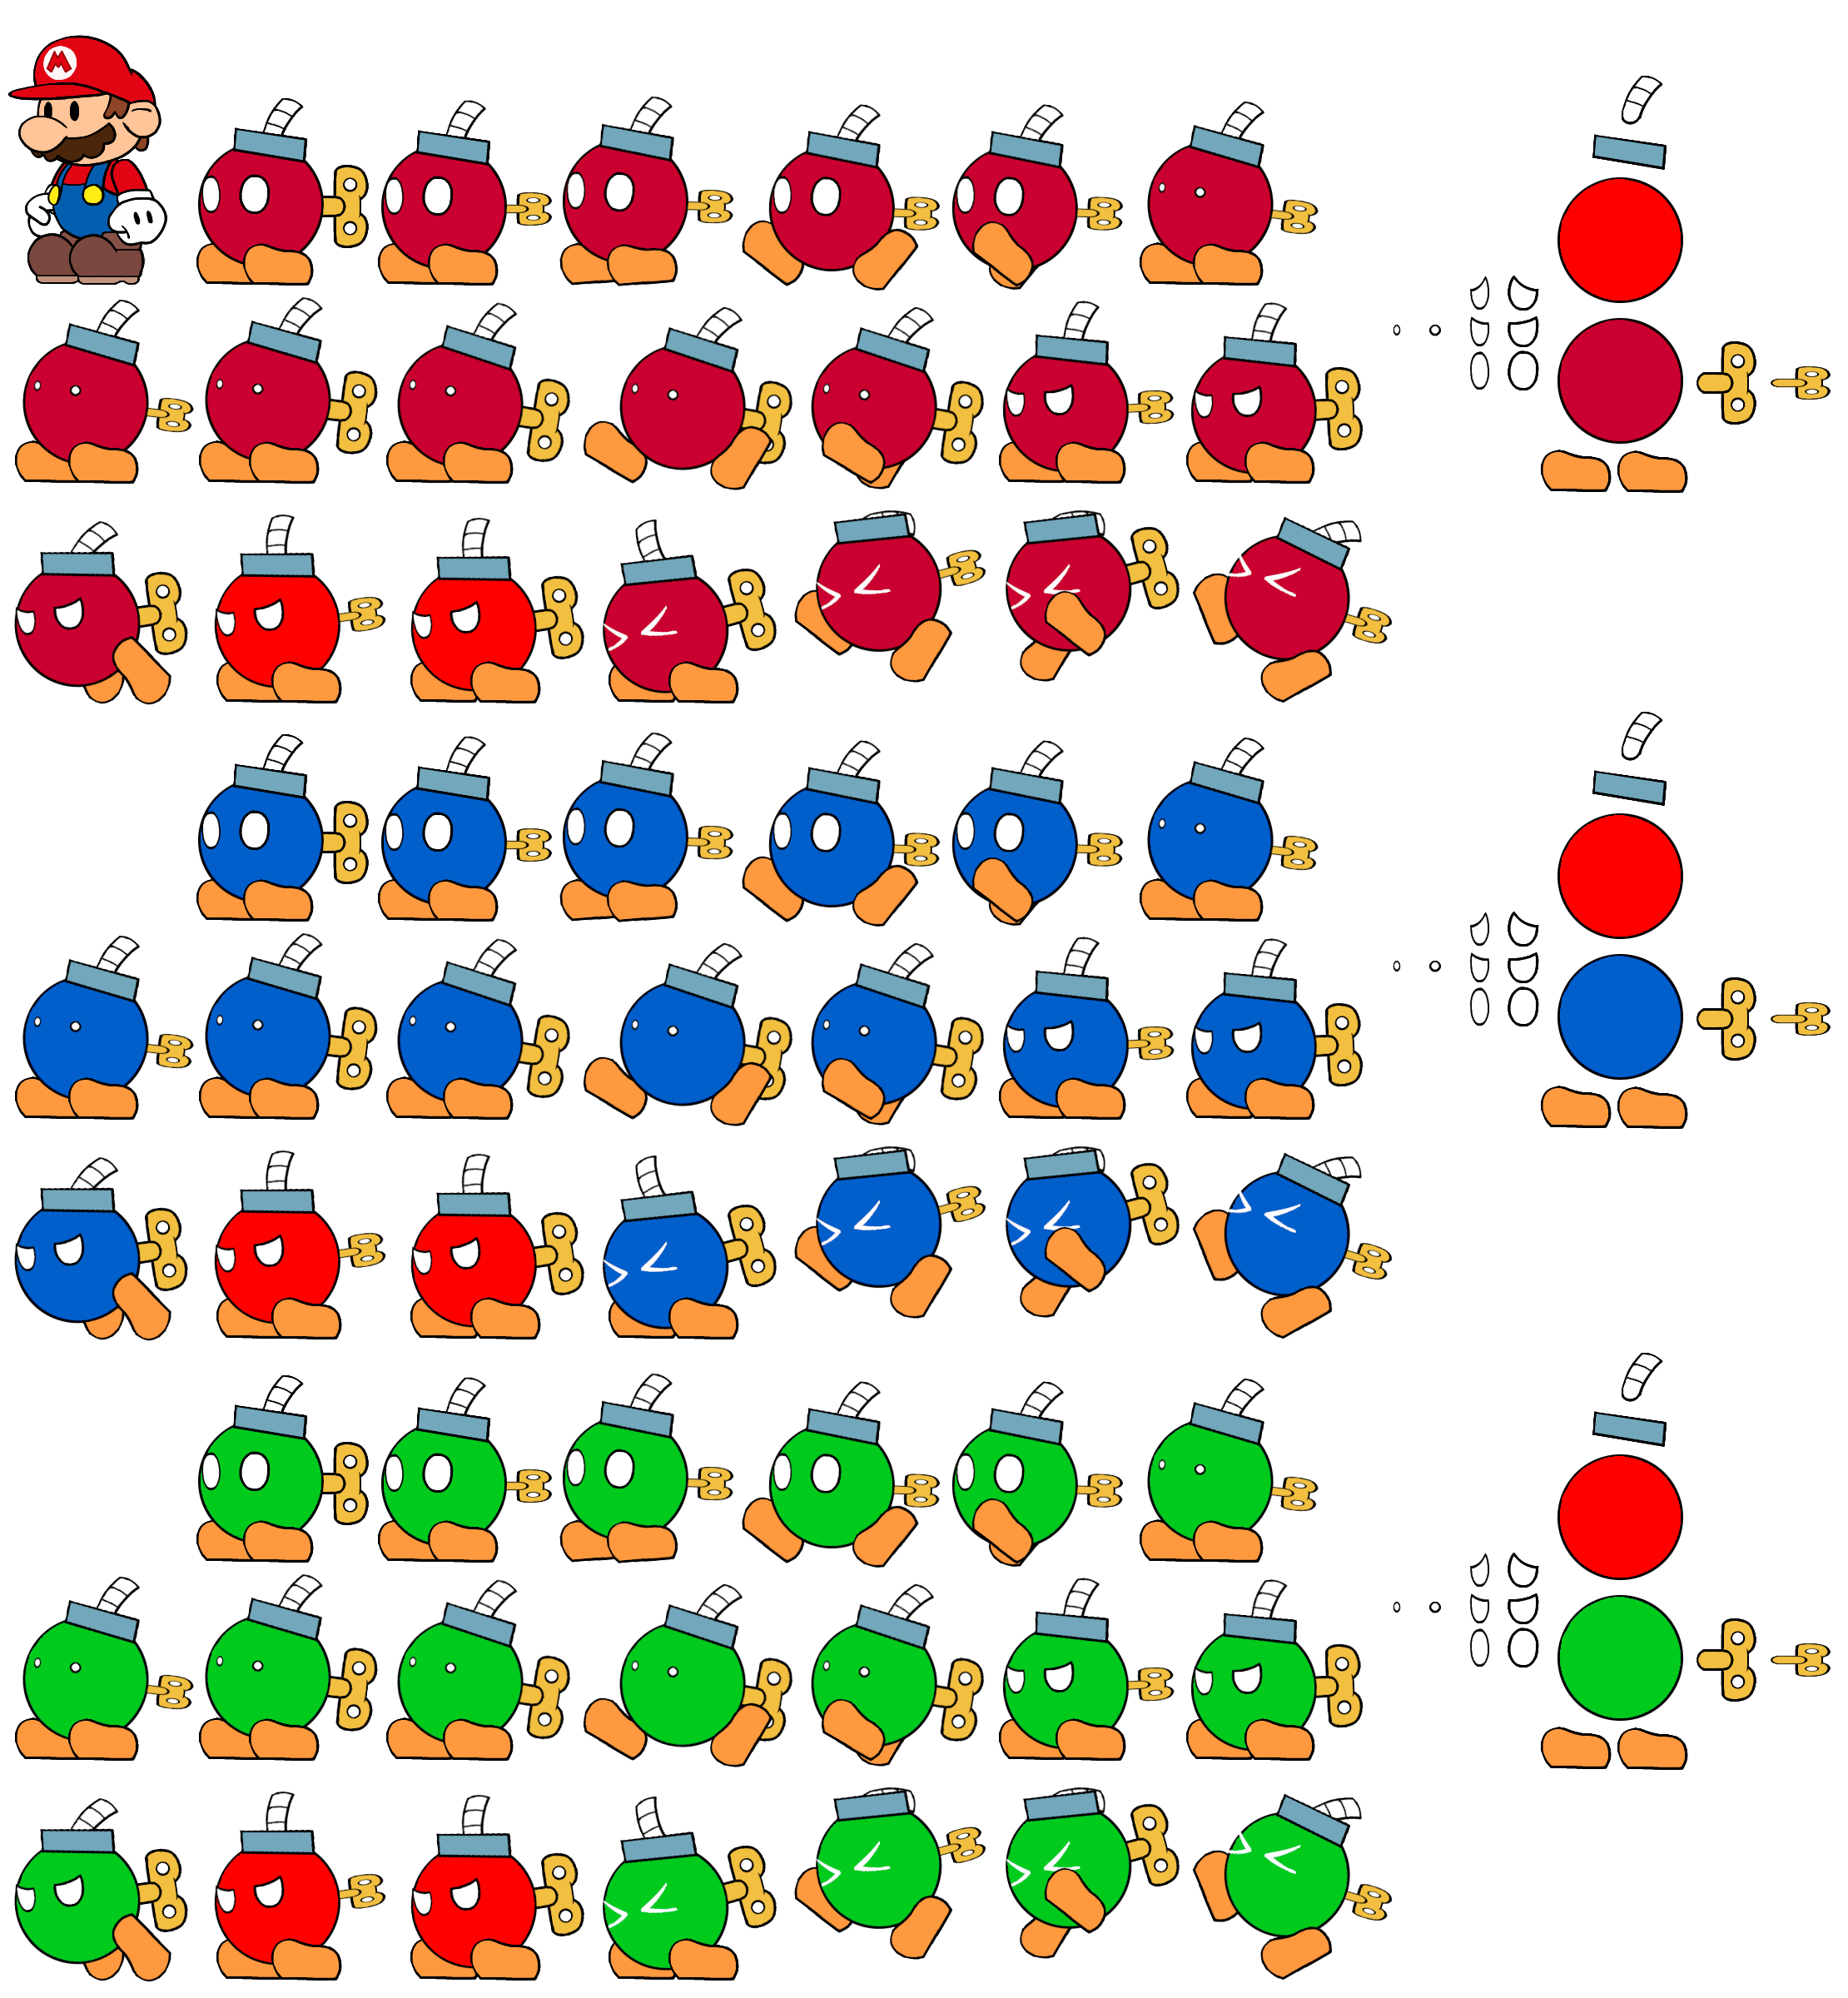 Mario Customs - Bob-omb Buddy (Paper Mario-Style)